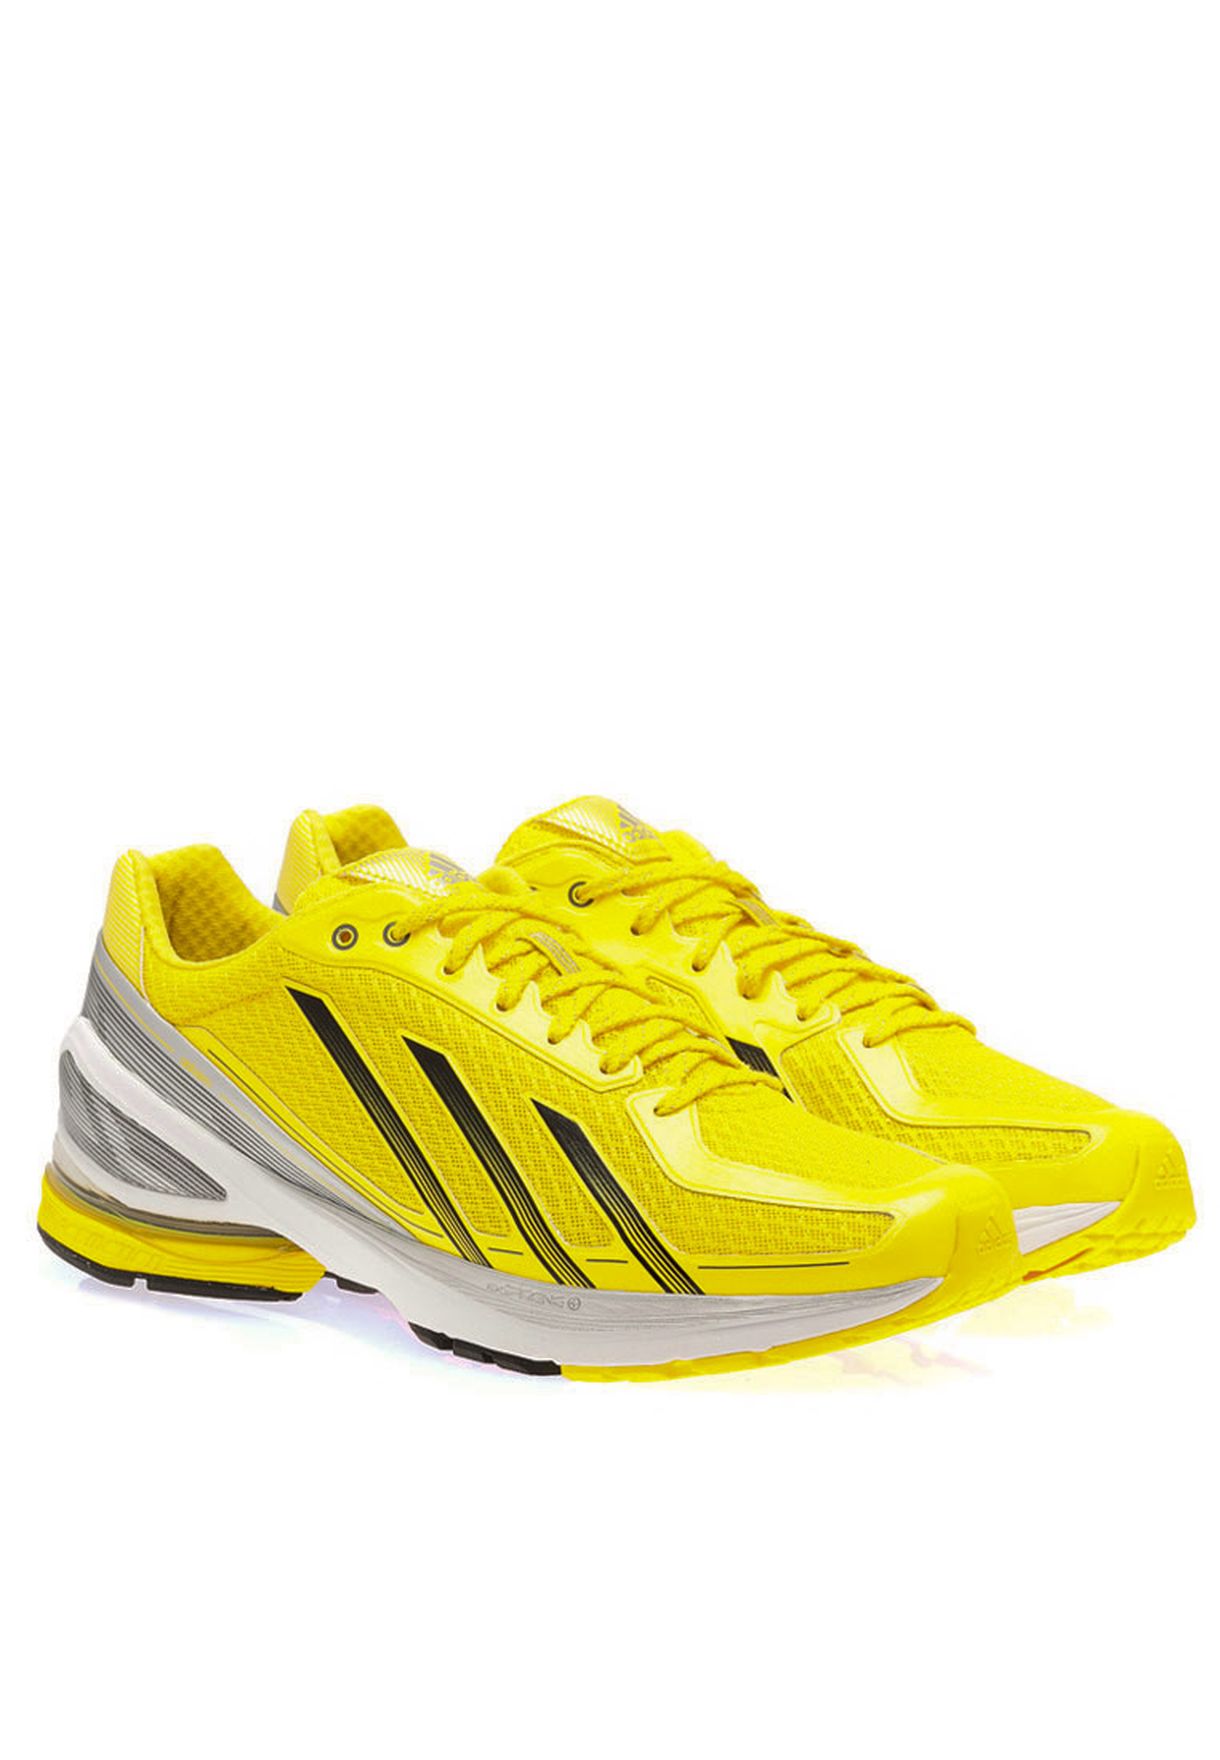 yellow adidas f50